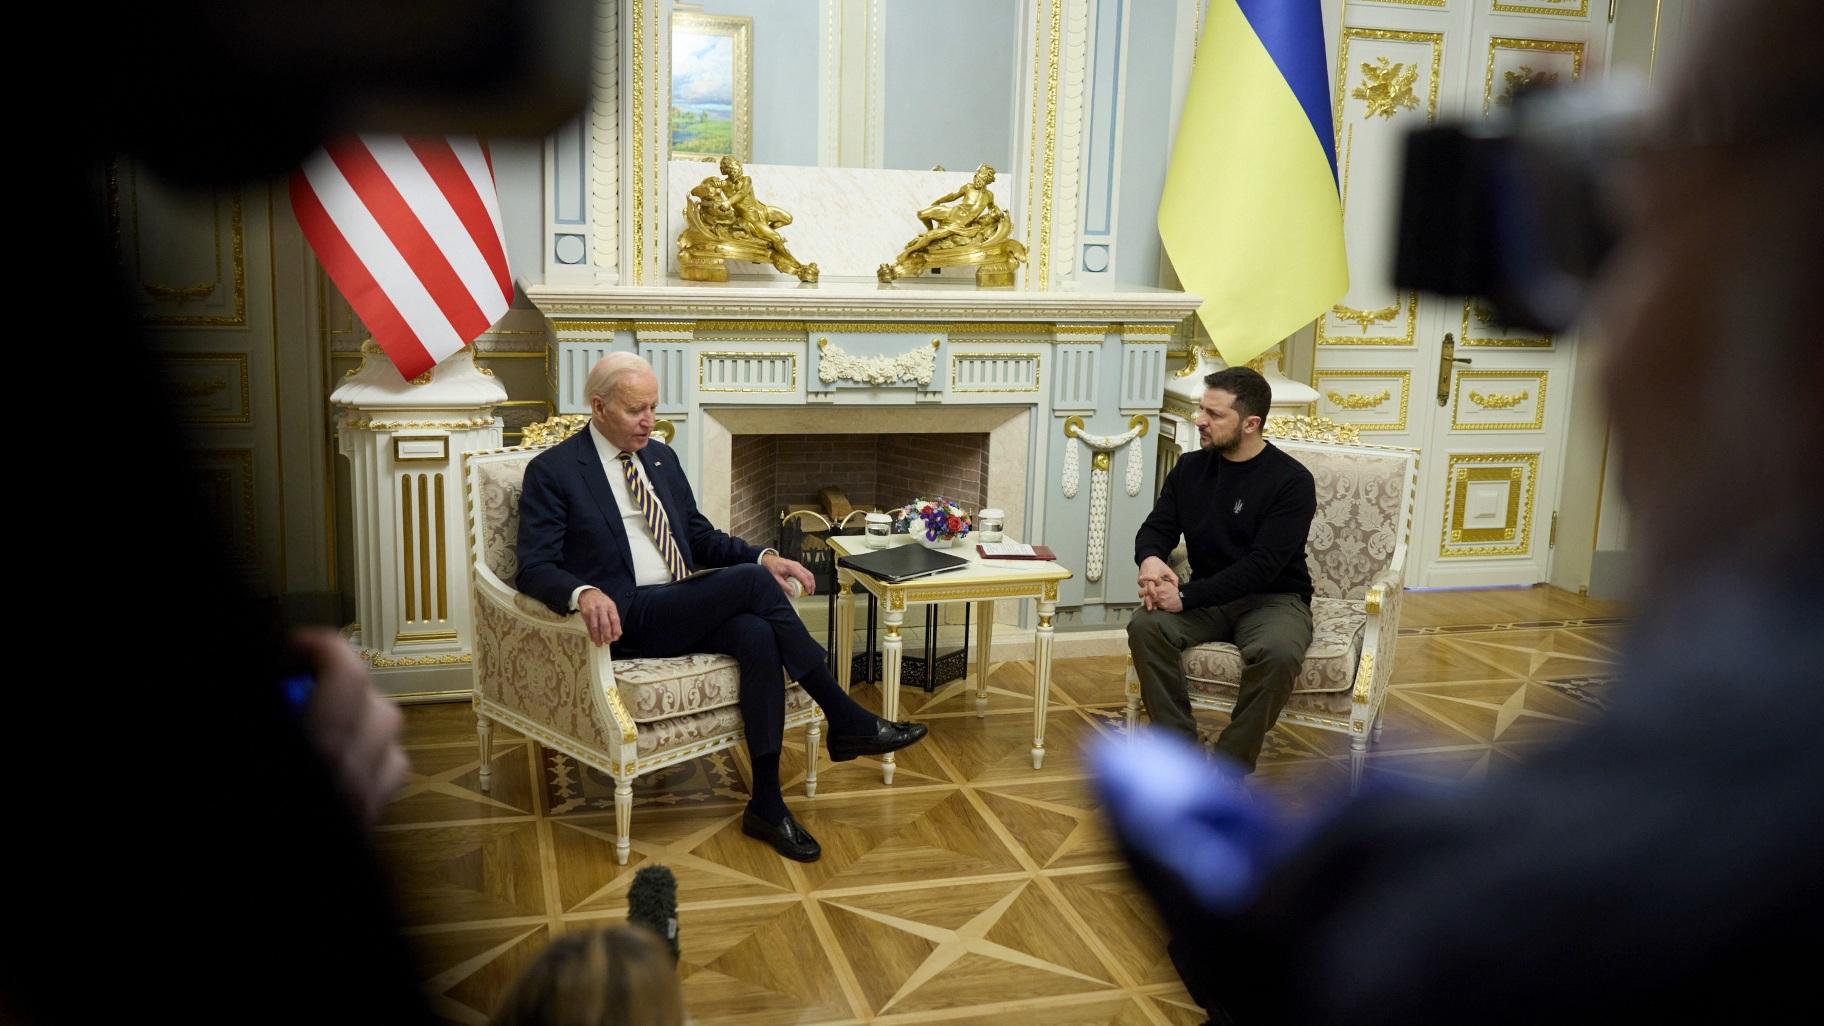 President Joe Biden meets with Ukrainian President Volodymyr Zelenskyy at the Ukrainian presidential palace on February 20, in Kyiv, Ukraine. (Handout / Ukrainian Presidential Press Office / Getty Images)